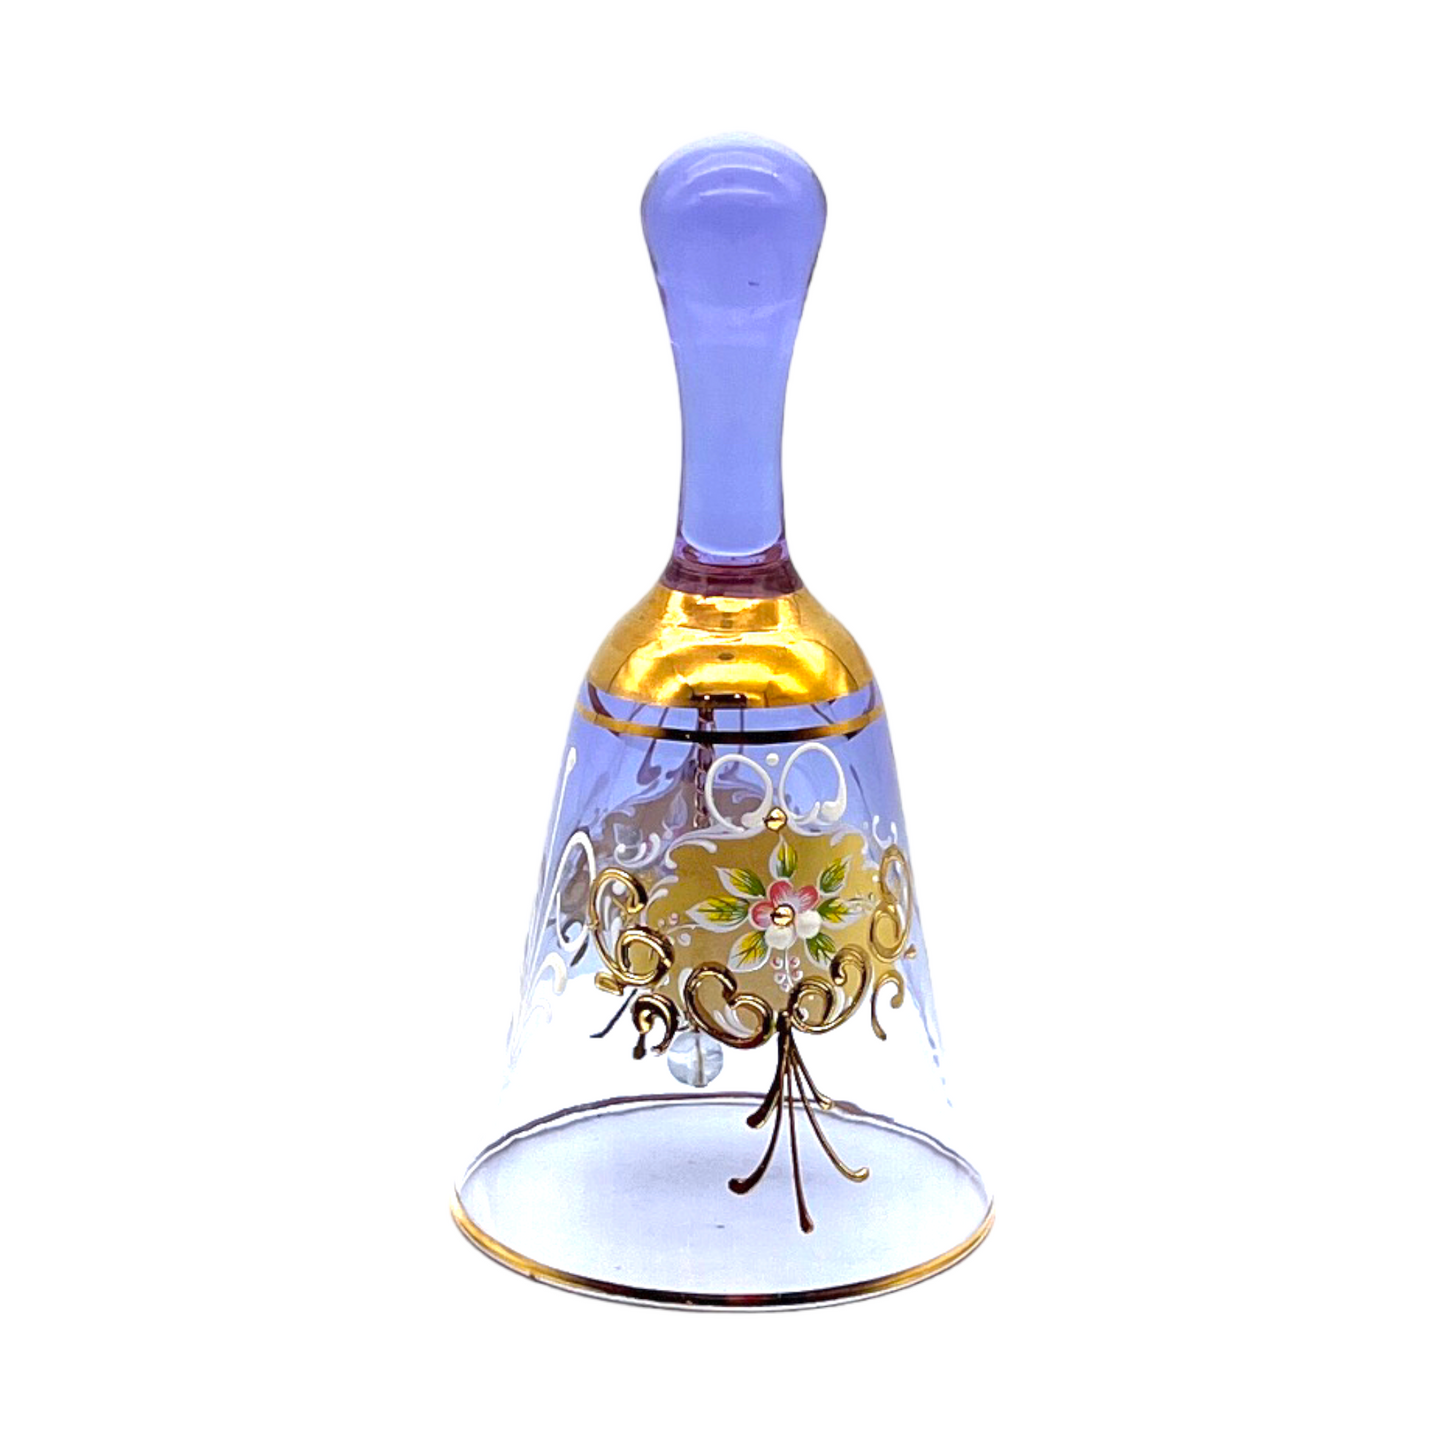 Murano Art Glass - 1930-1950s Era Hand Blown Italian Floral & Gilt Glass Bell in 24k Accent - 6"